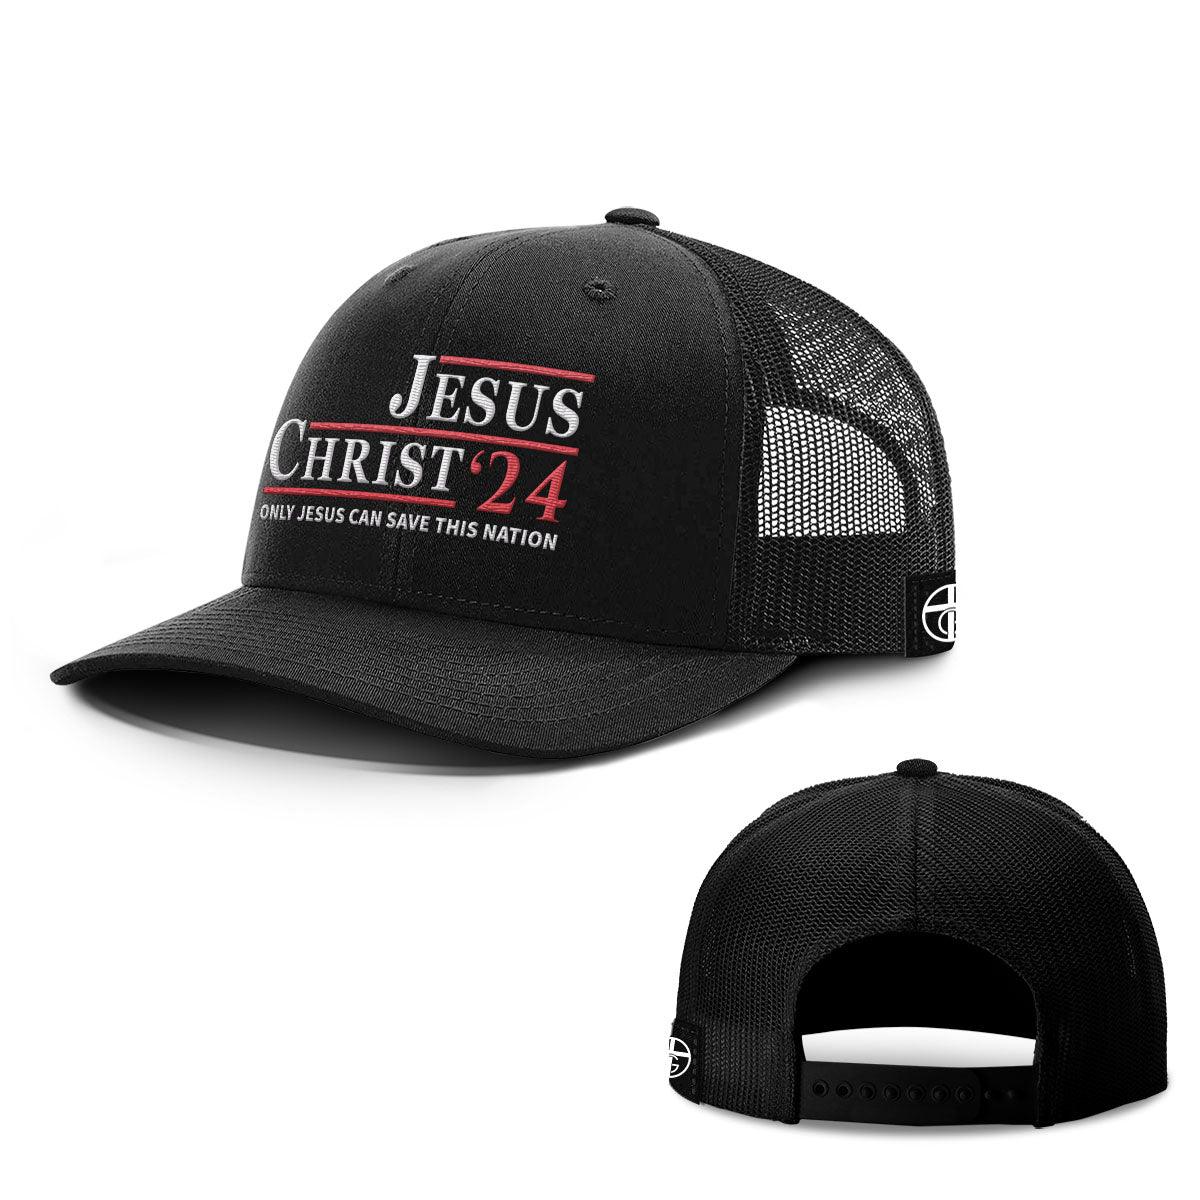 Jesus Christ'24 Hats - Our True God